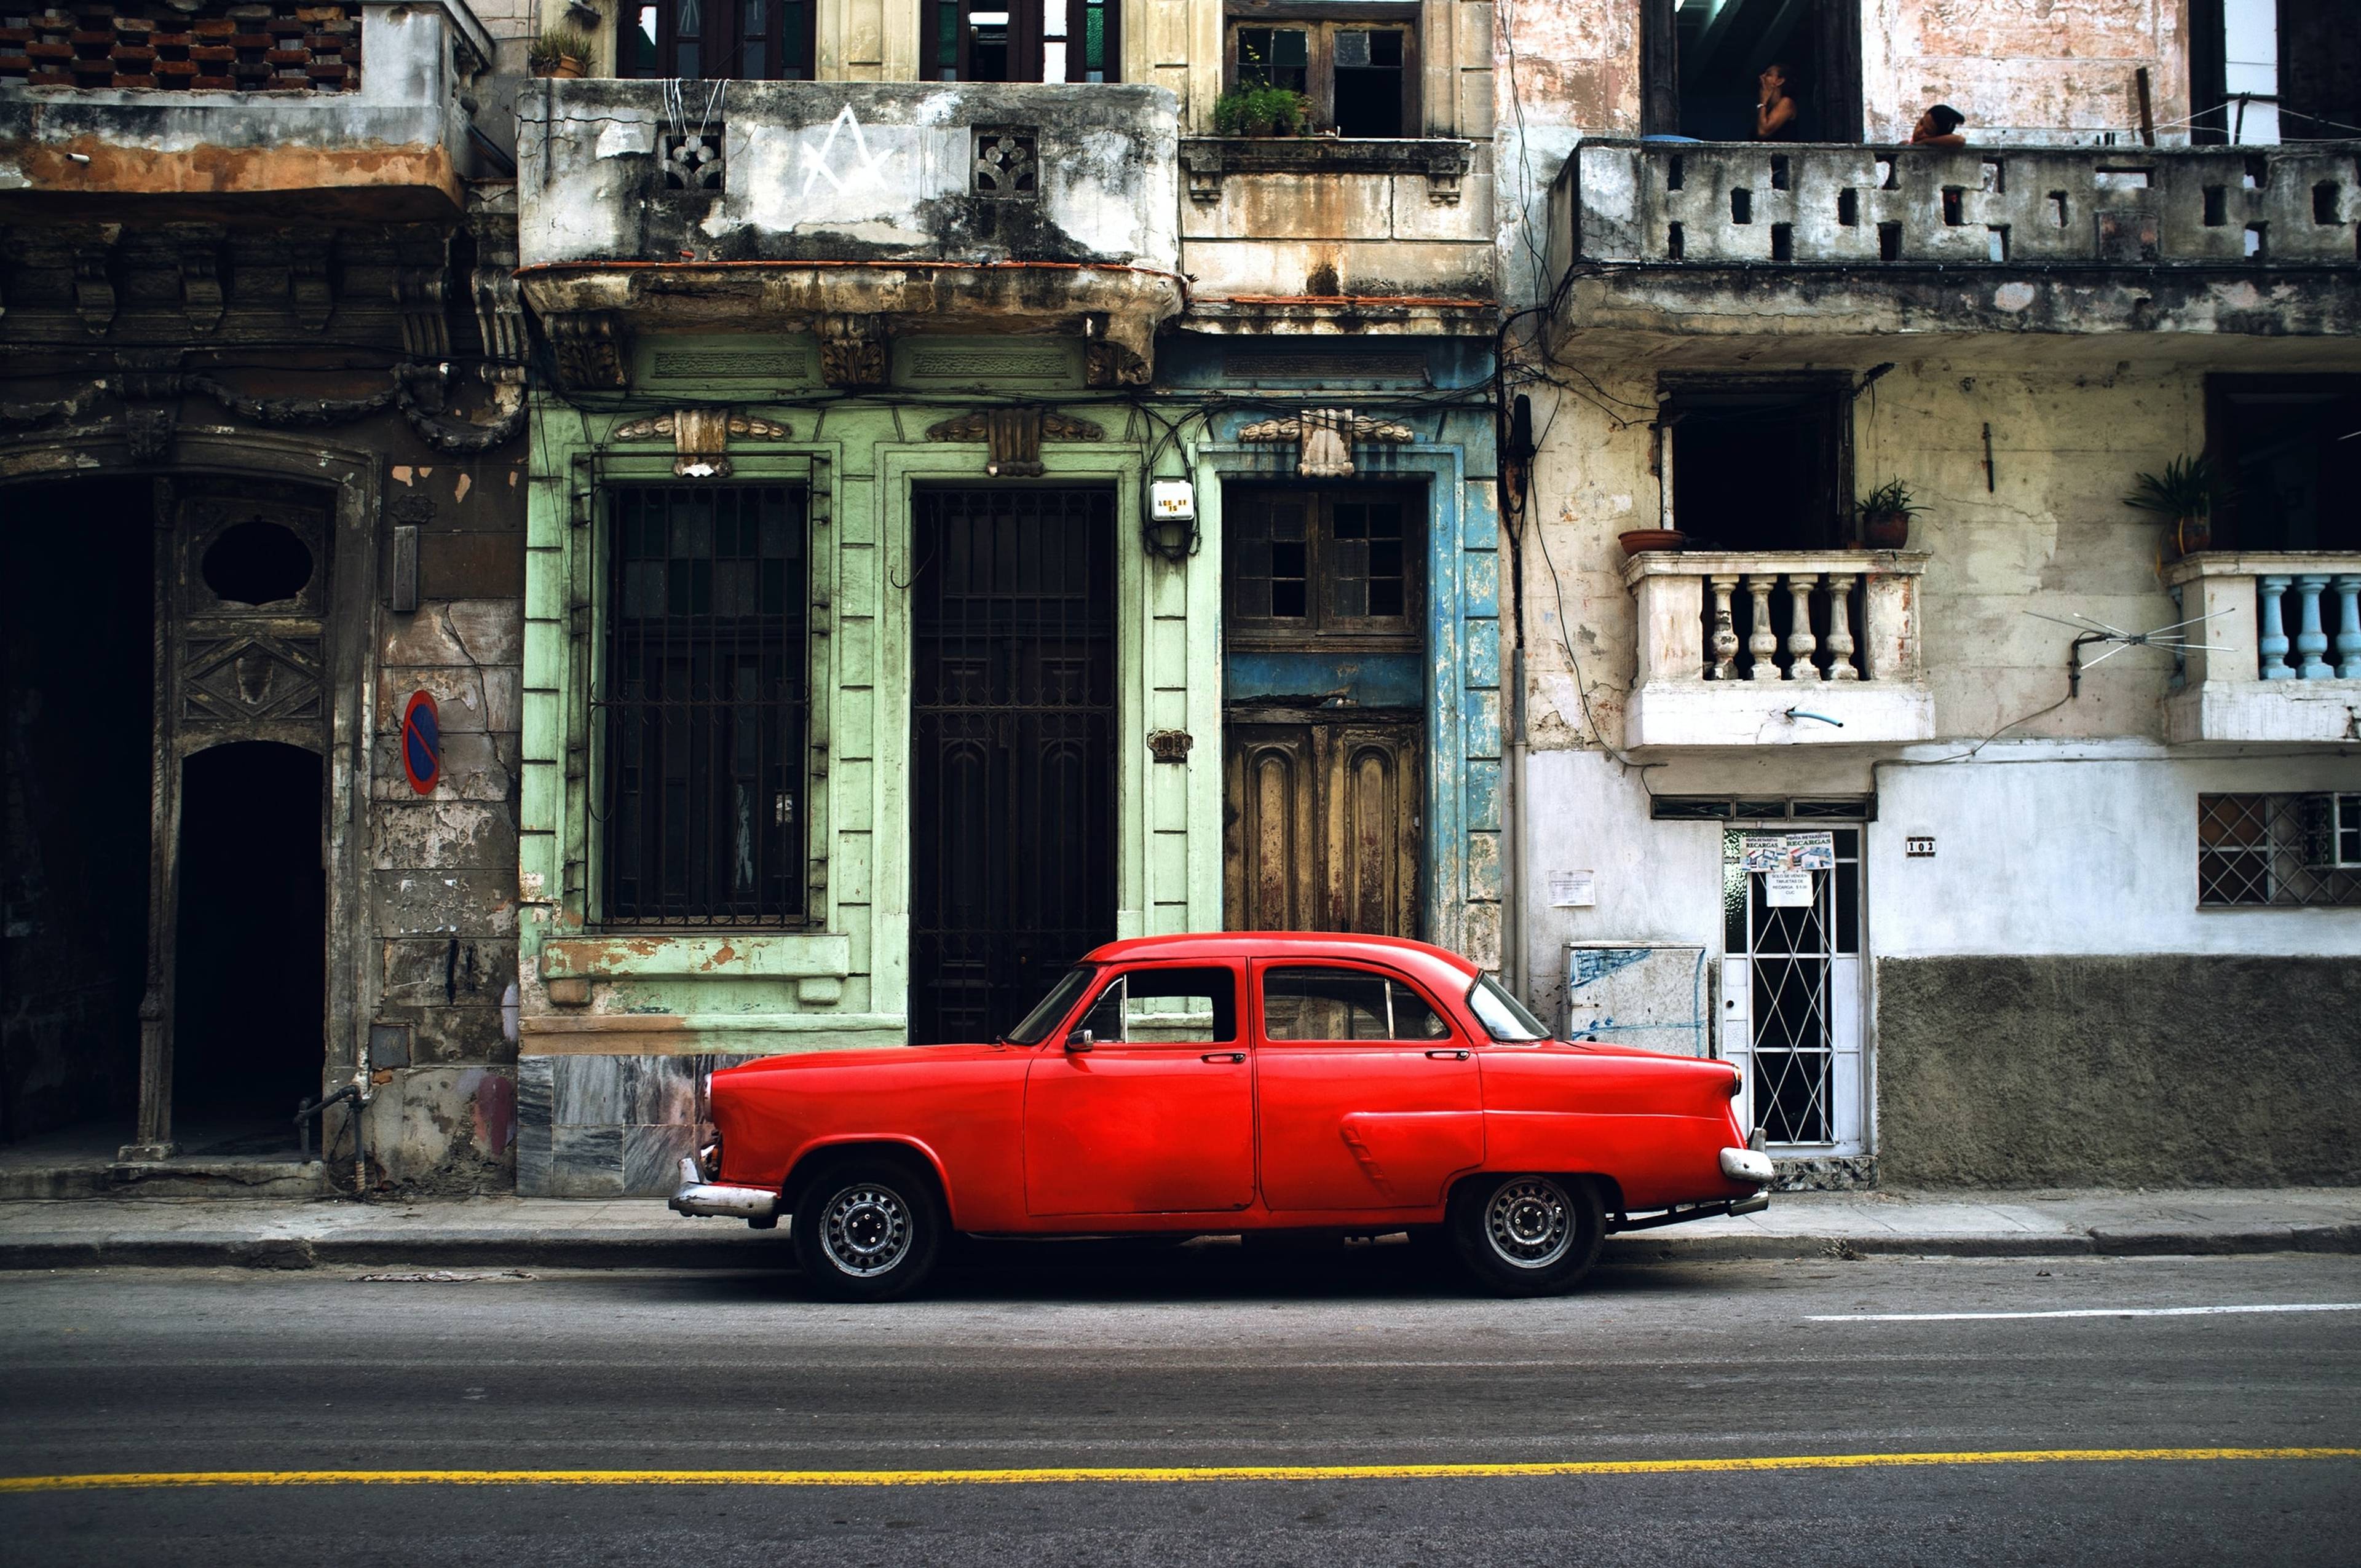 Macchina d'epoca fra le strade di Cuba